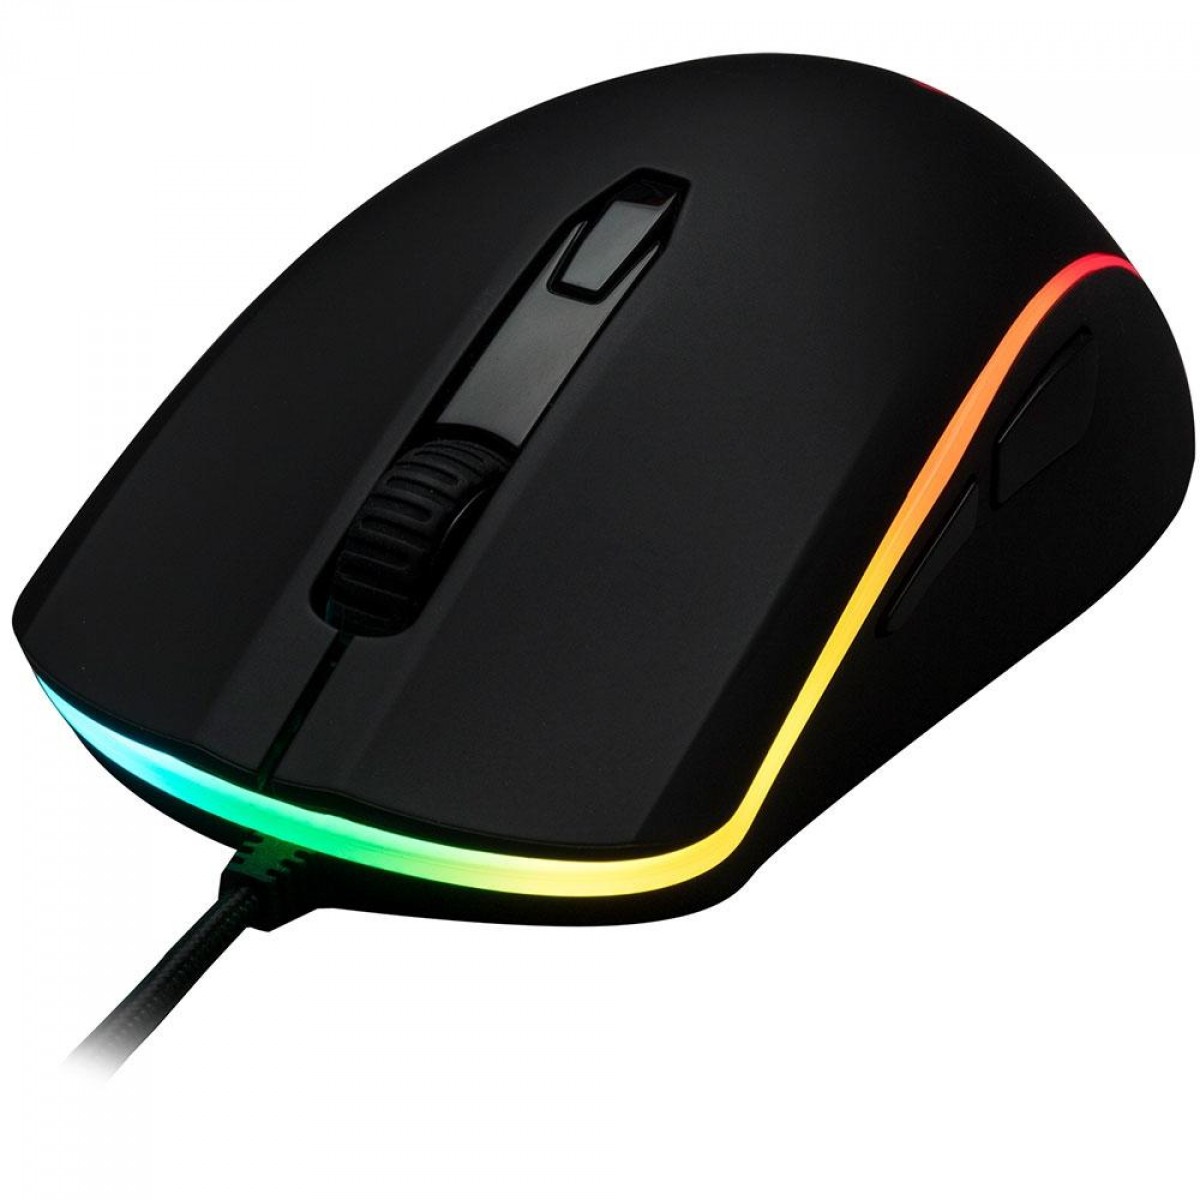 Mouse Gamer HyperX Pulsefire Surge RGB, 16000 DPI, USB, Black, HX-MC002B